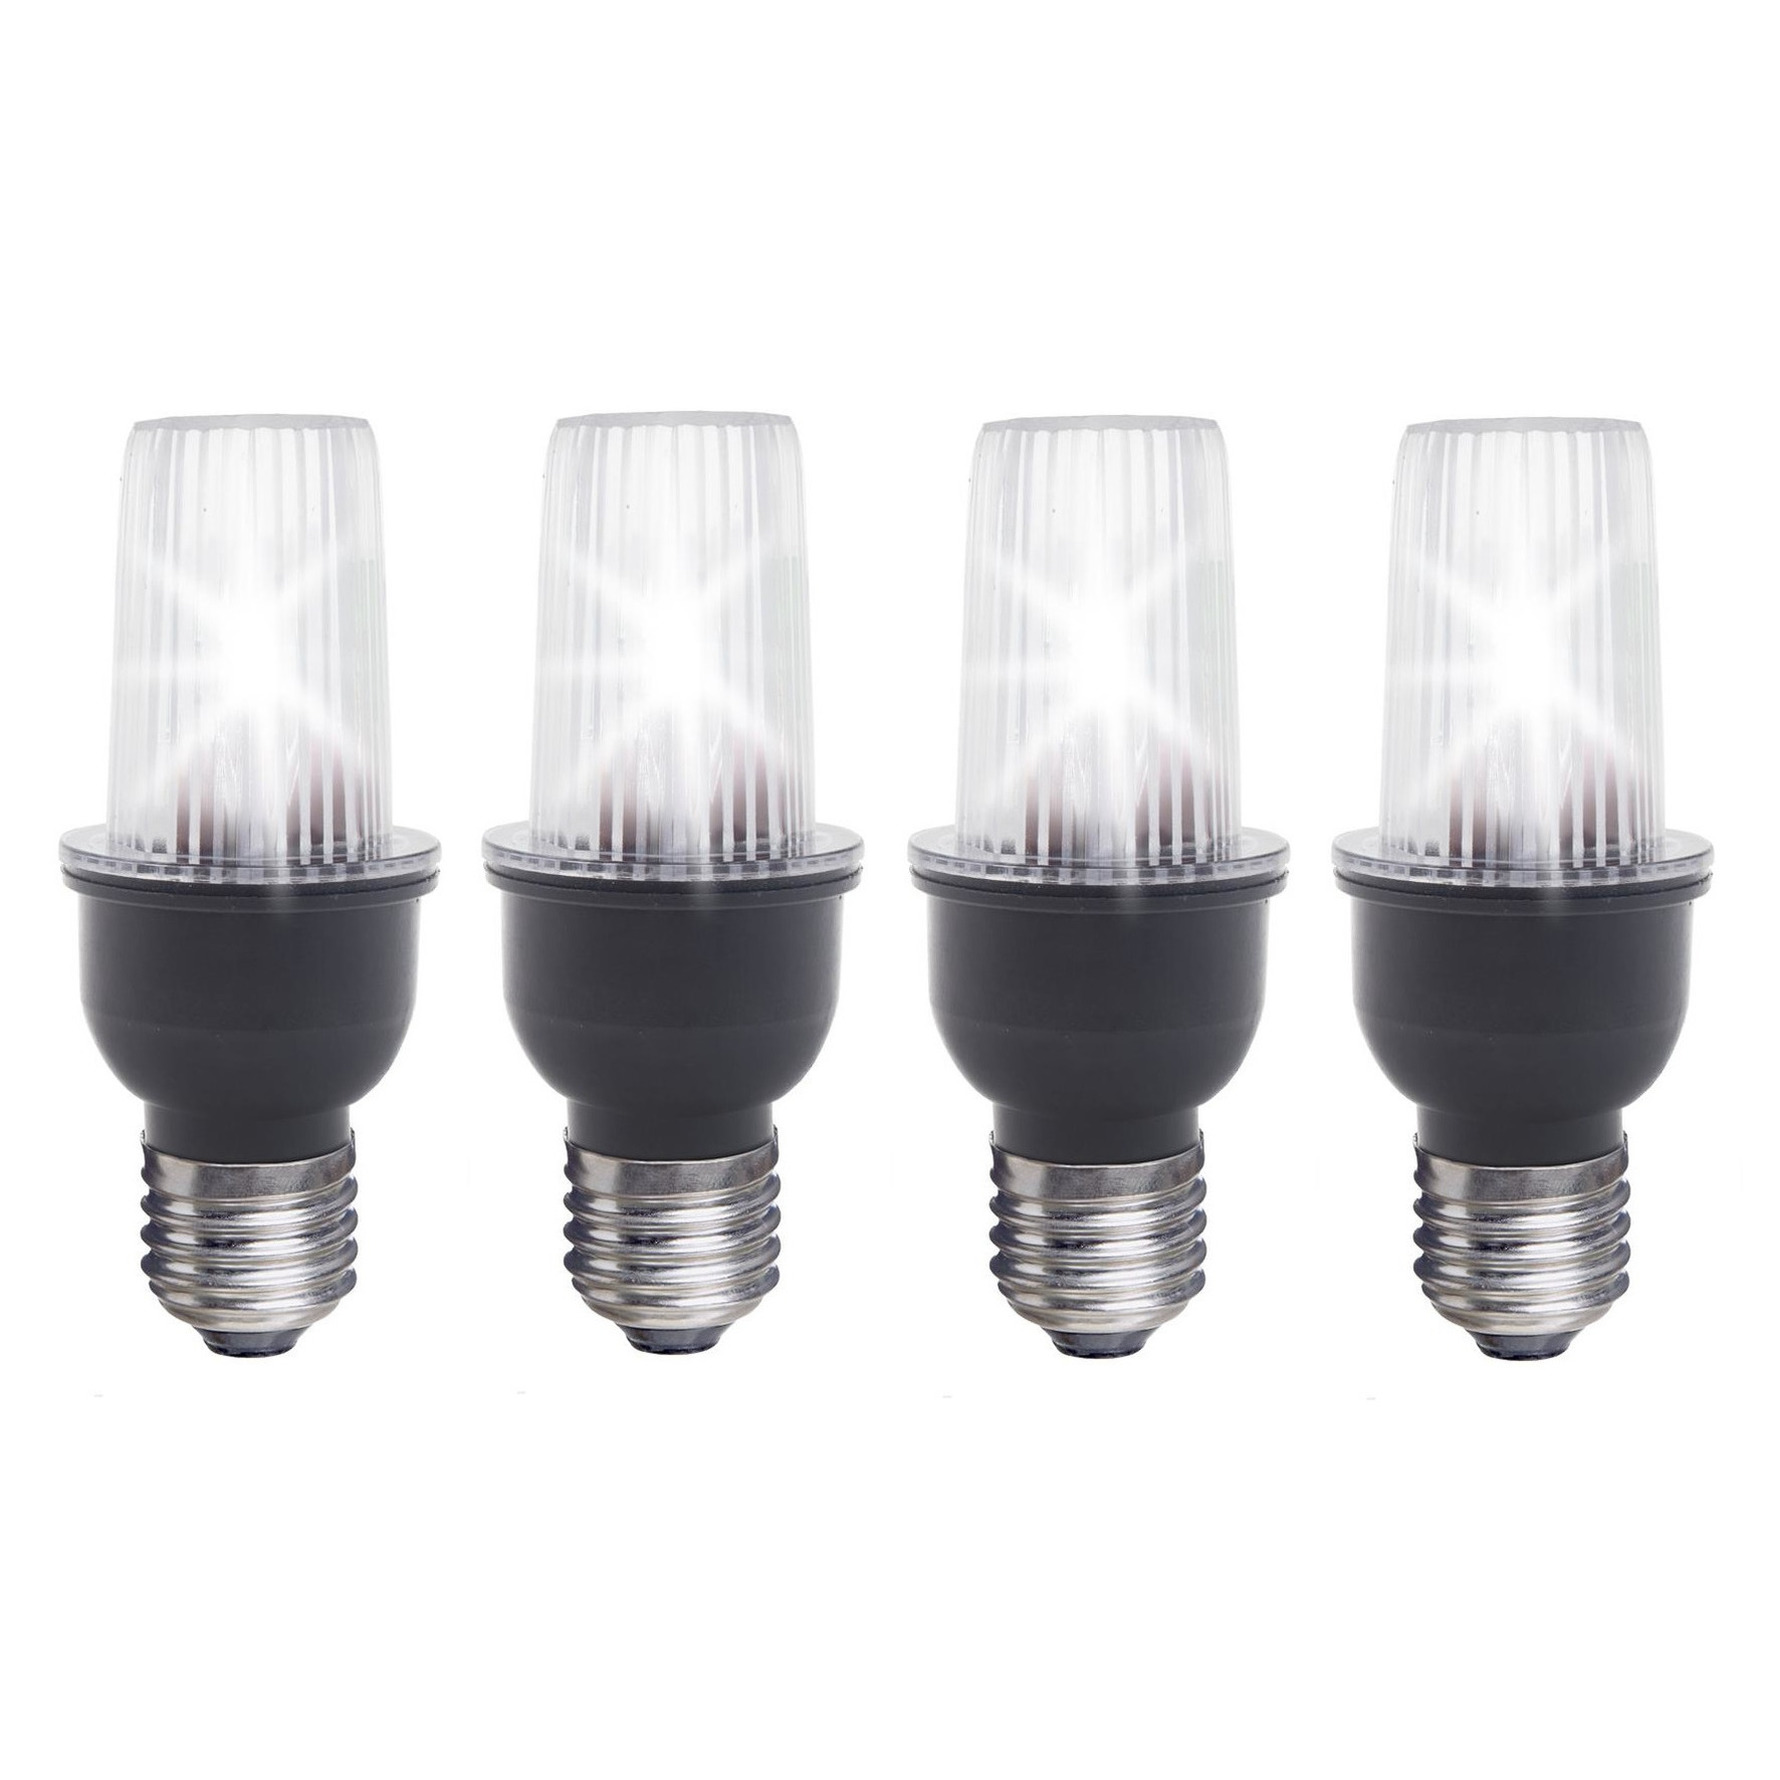 Set van 4x stuks stroboscoop lampen discolampen LED met E27 fitting 230V